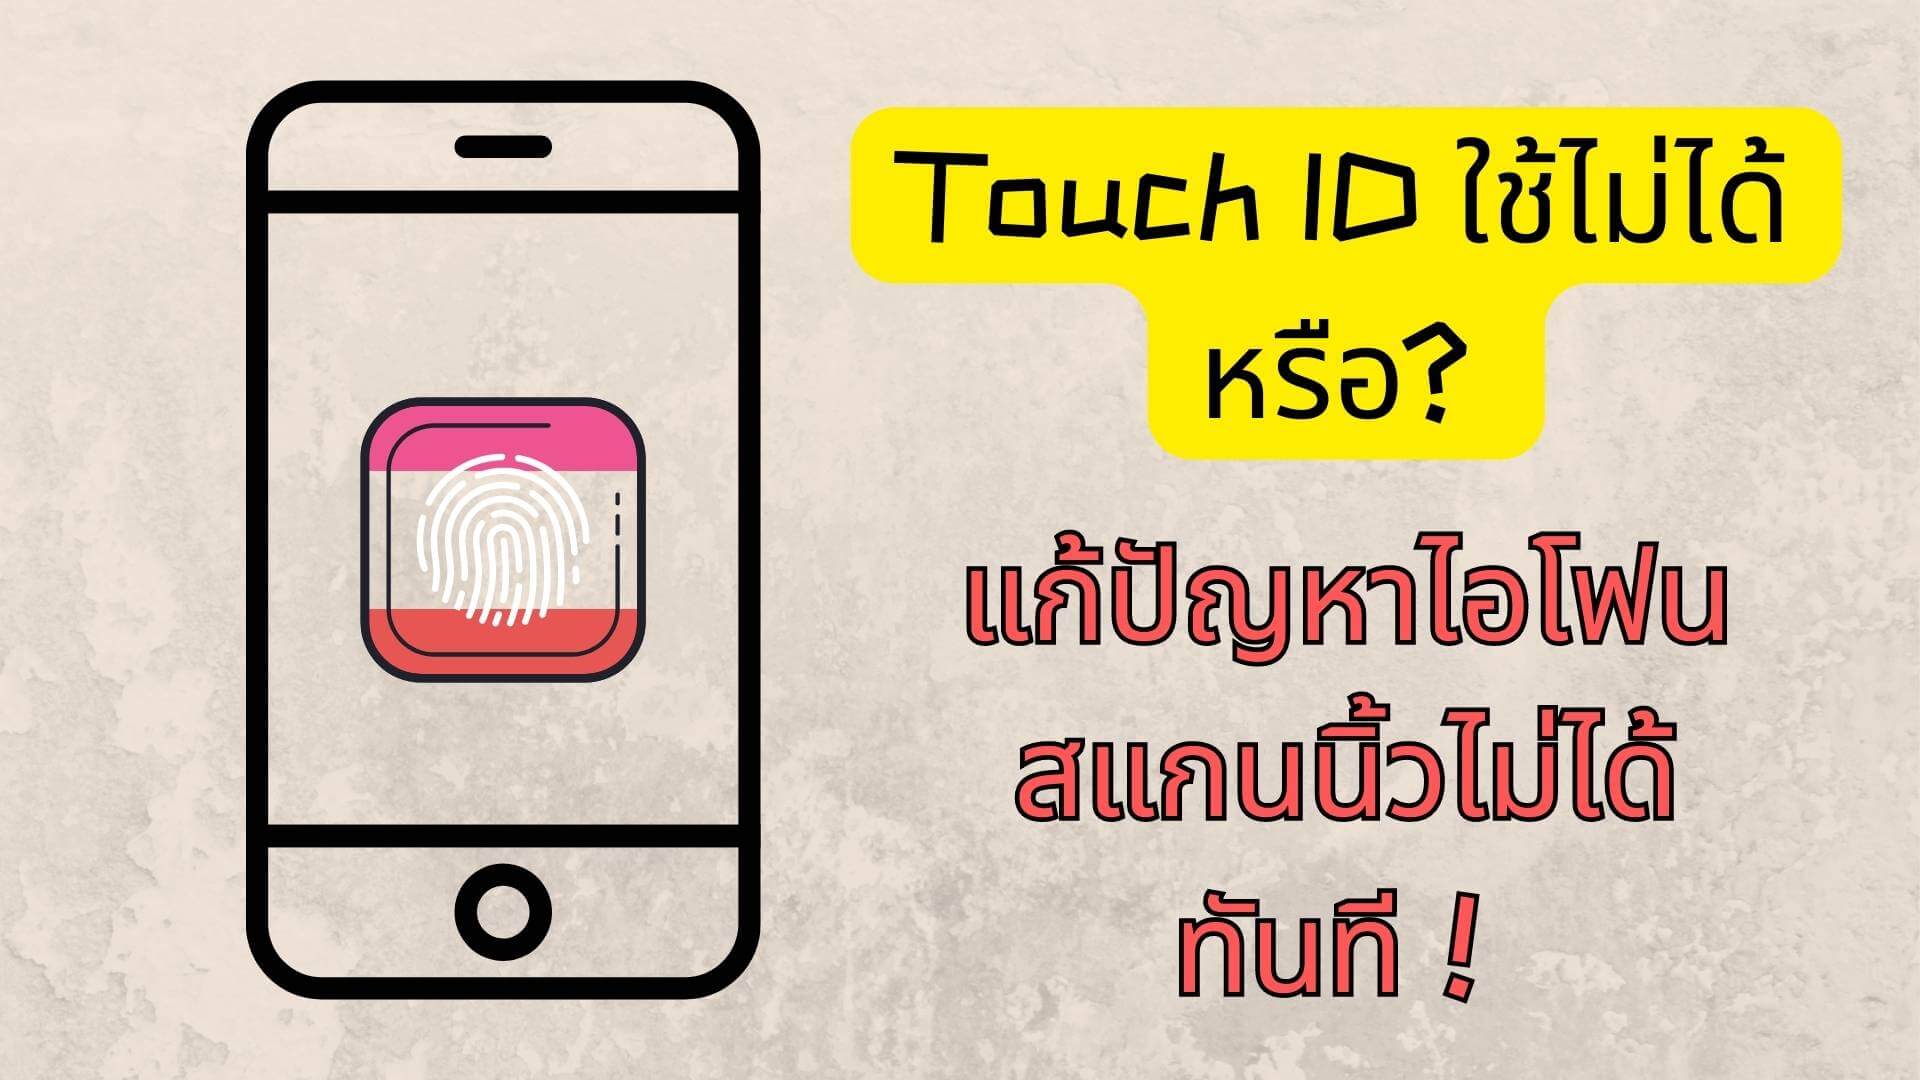 Touch ID ใช้ไม่ได้